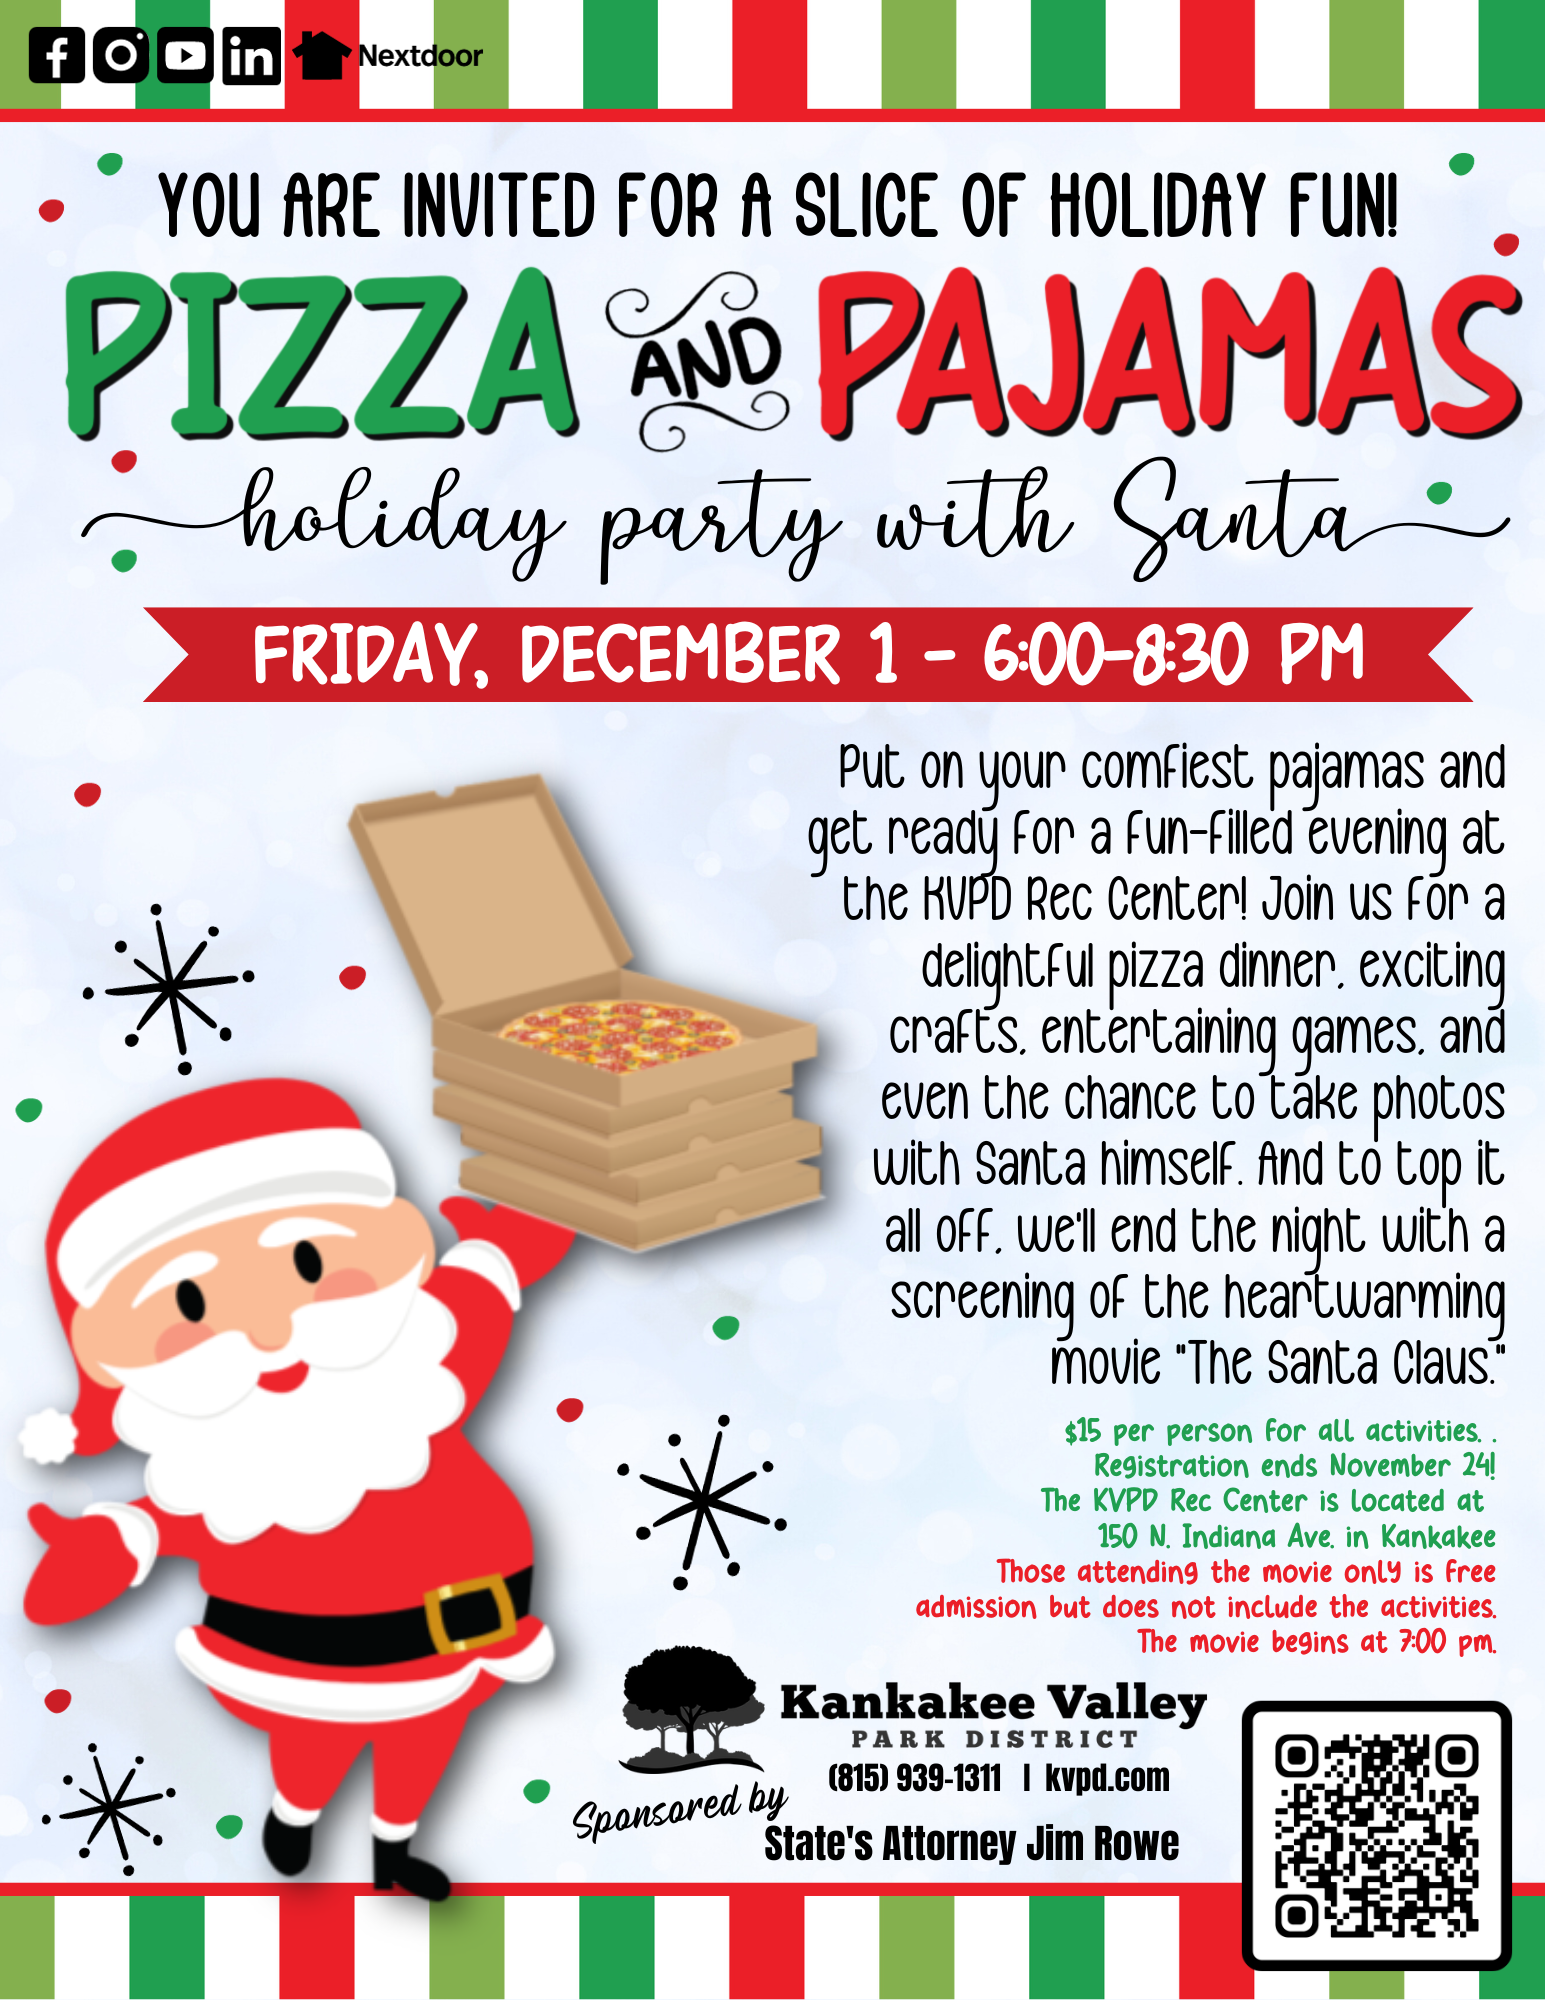 Pizza and Pajamas Holiday Party with Santa